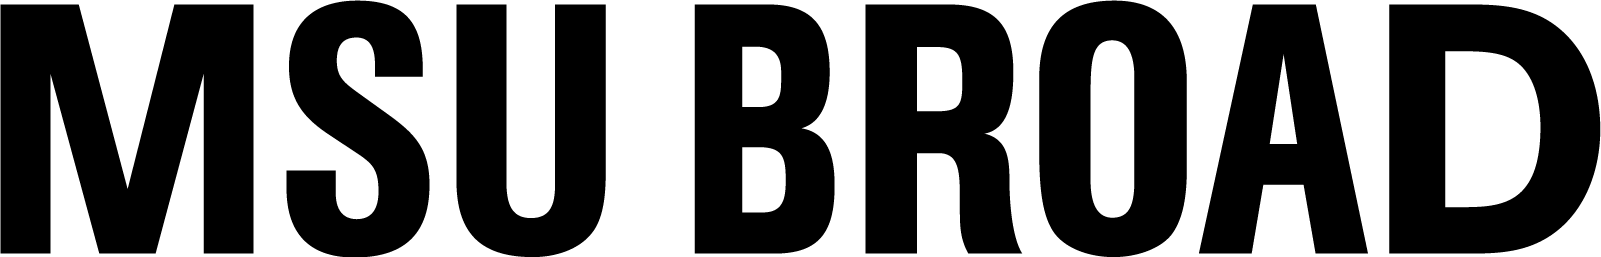 MSU Broad logo